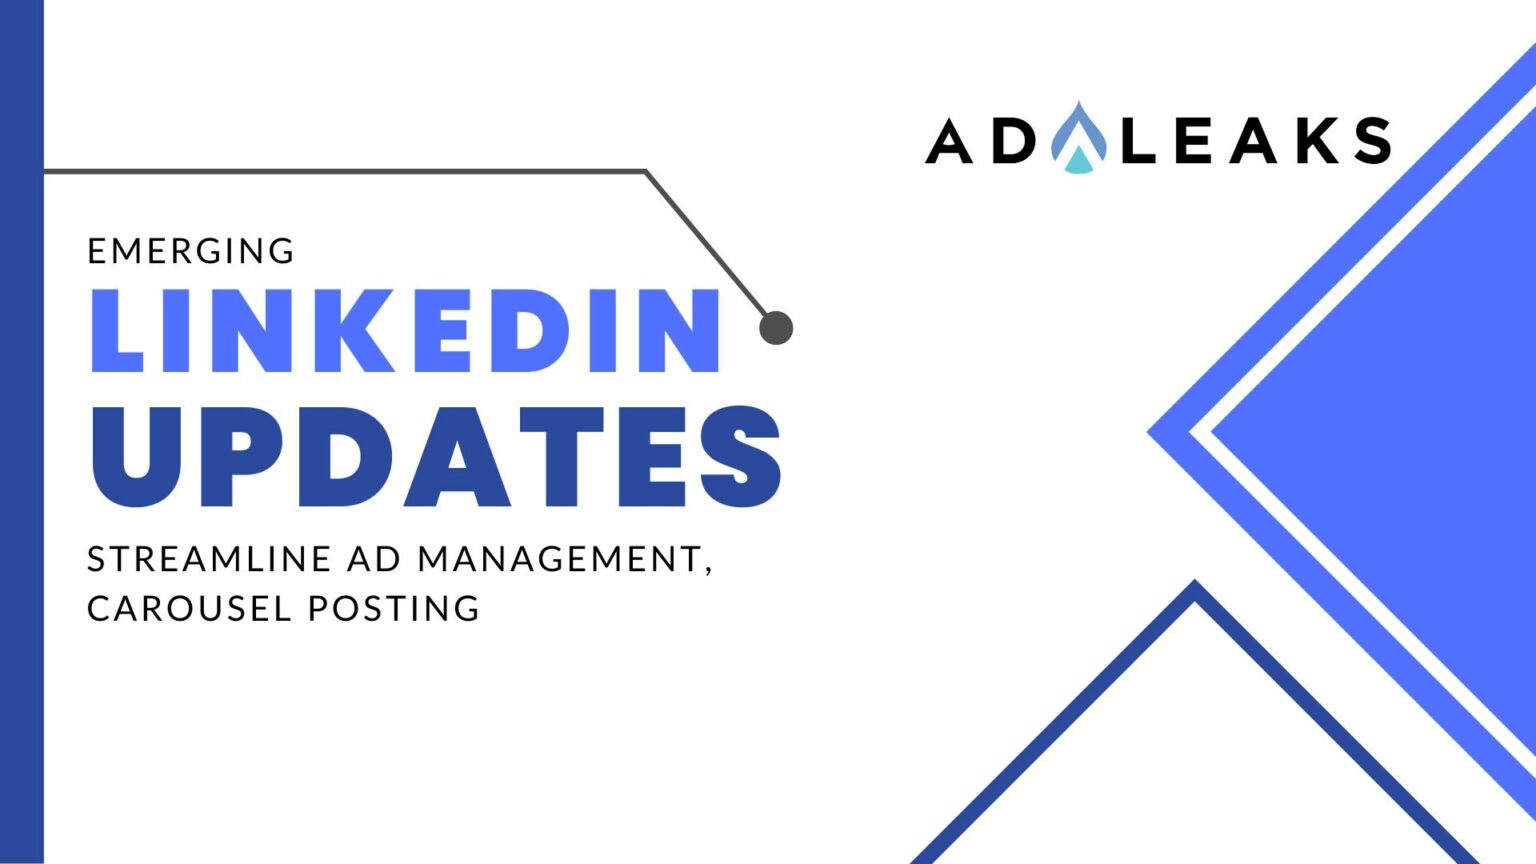 Emerging LinkedIn Updates Streamline Ad Management, Carousel Posting